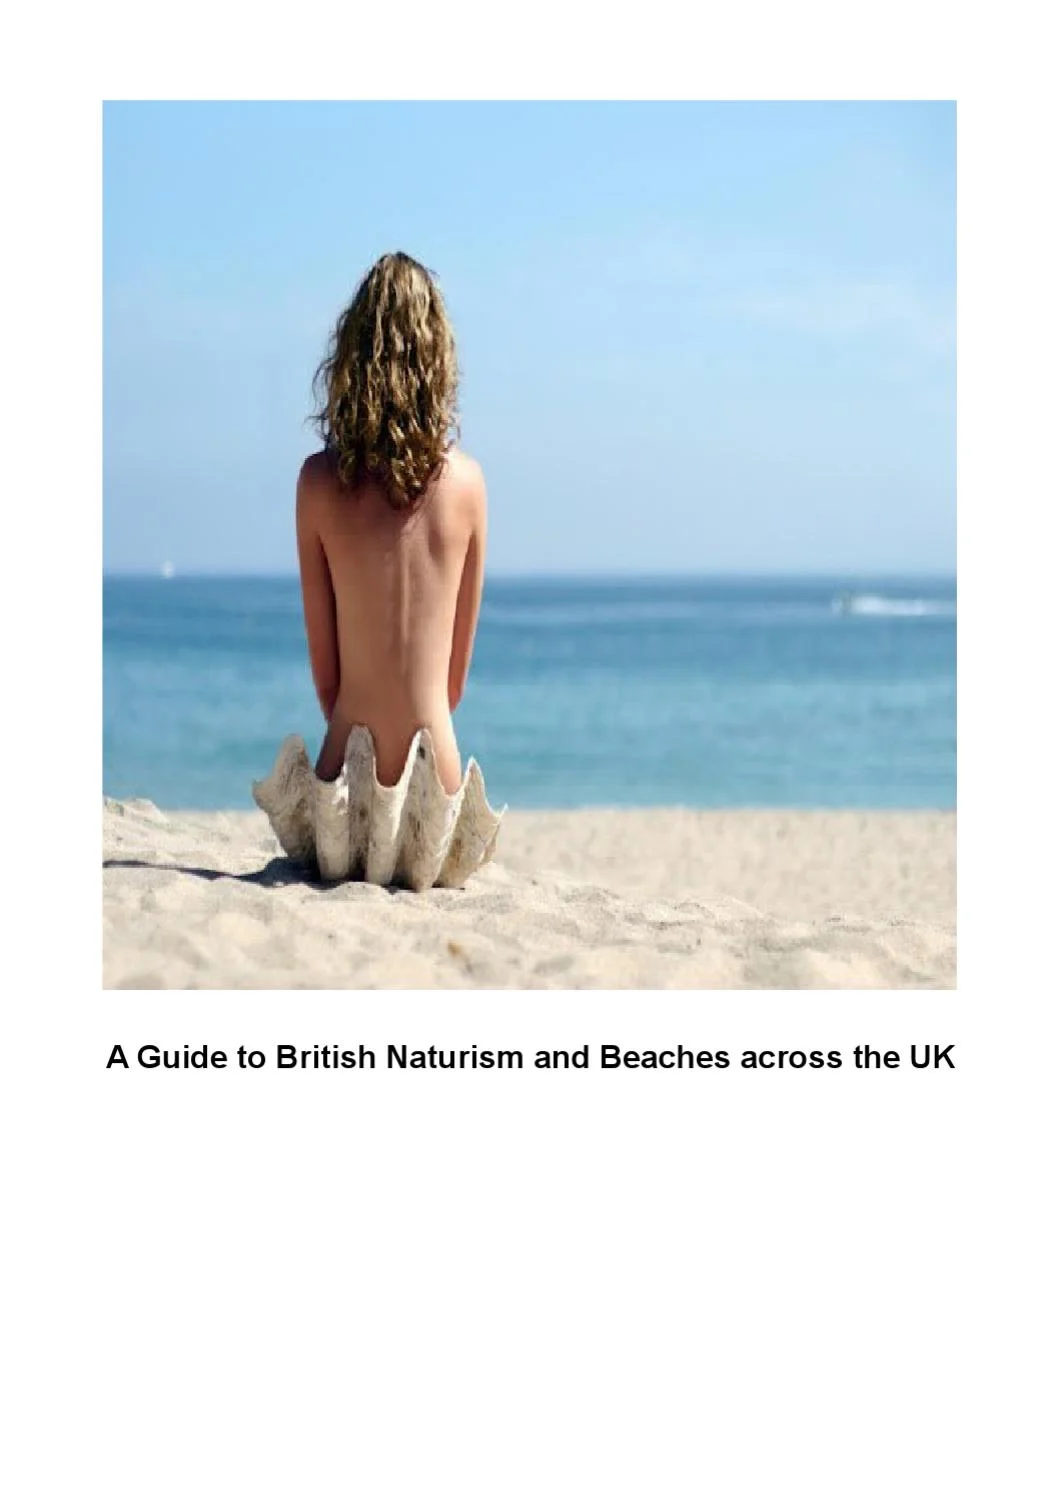 anushka paverman recommends naturist beach erection pic